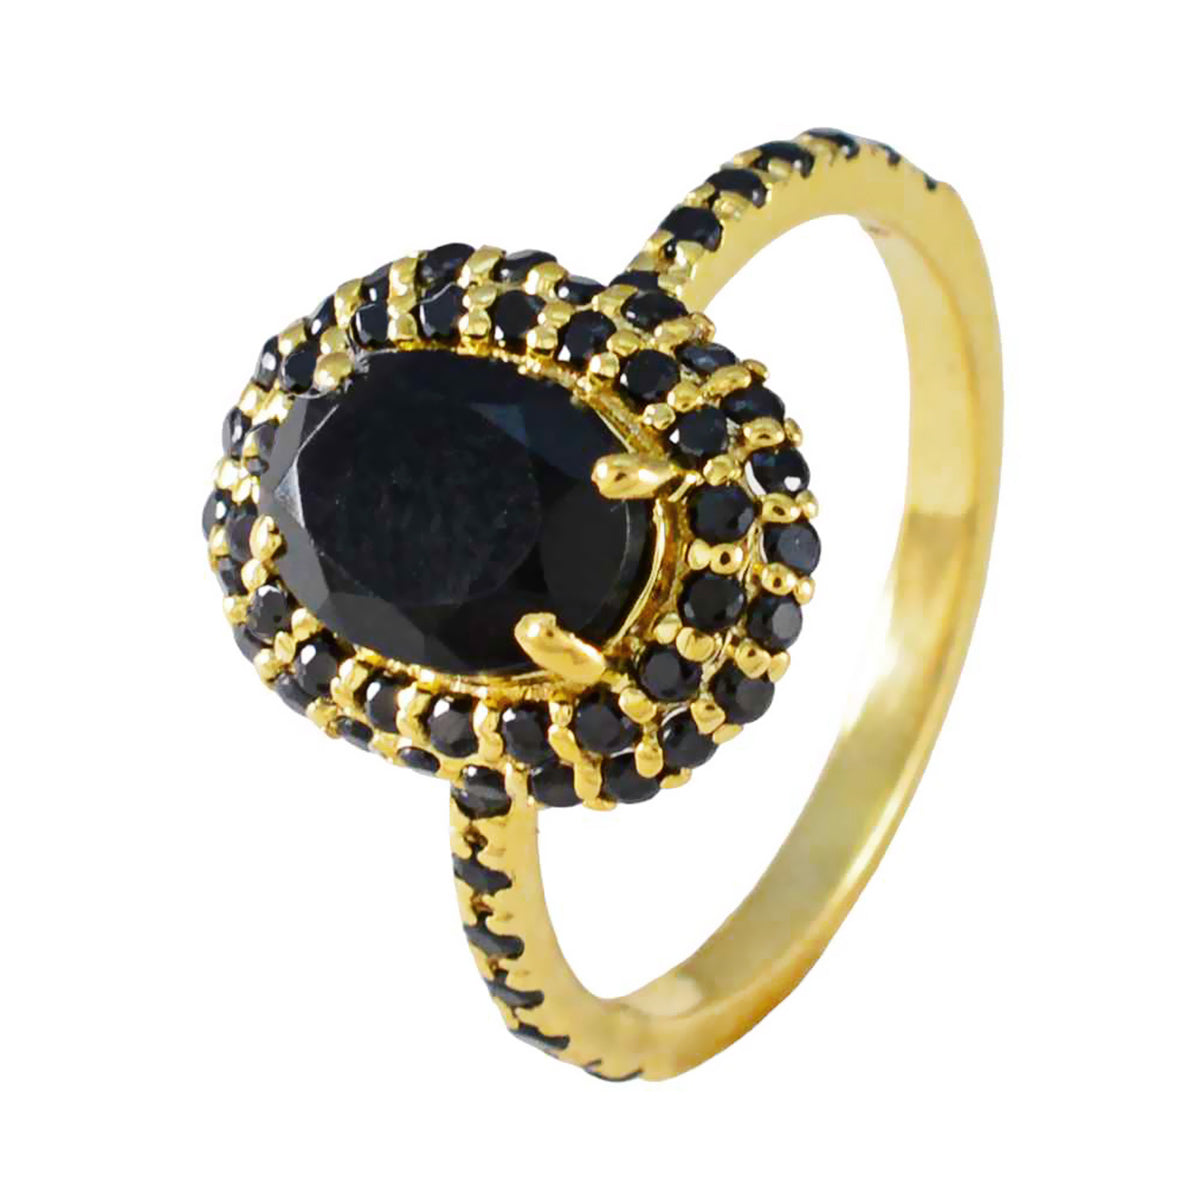 Riyo Edelsteen Zilveren Ring Met Geel Goud Plating Zwarte Onyx Steen Ovale Vorm Prong Setting Sieraden Cocktail Ring